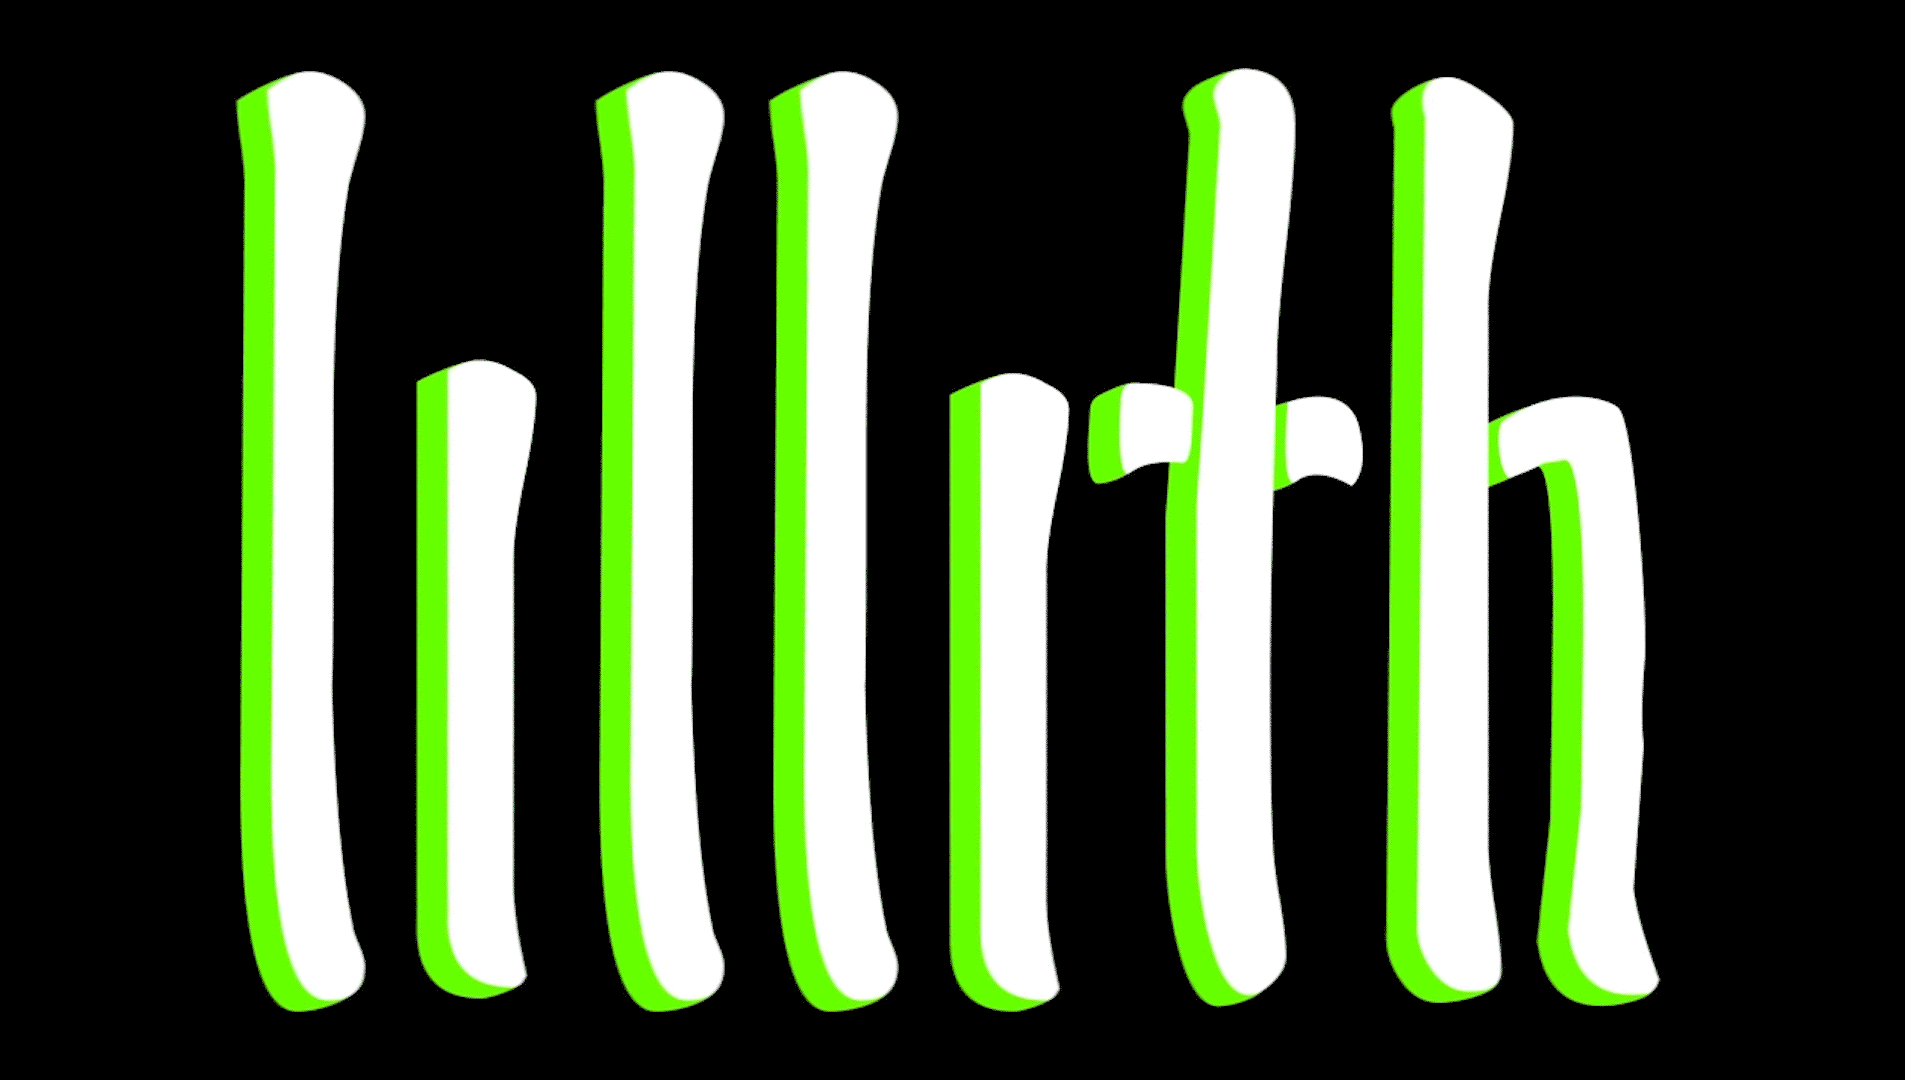 Lillith logo animation